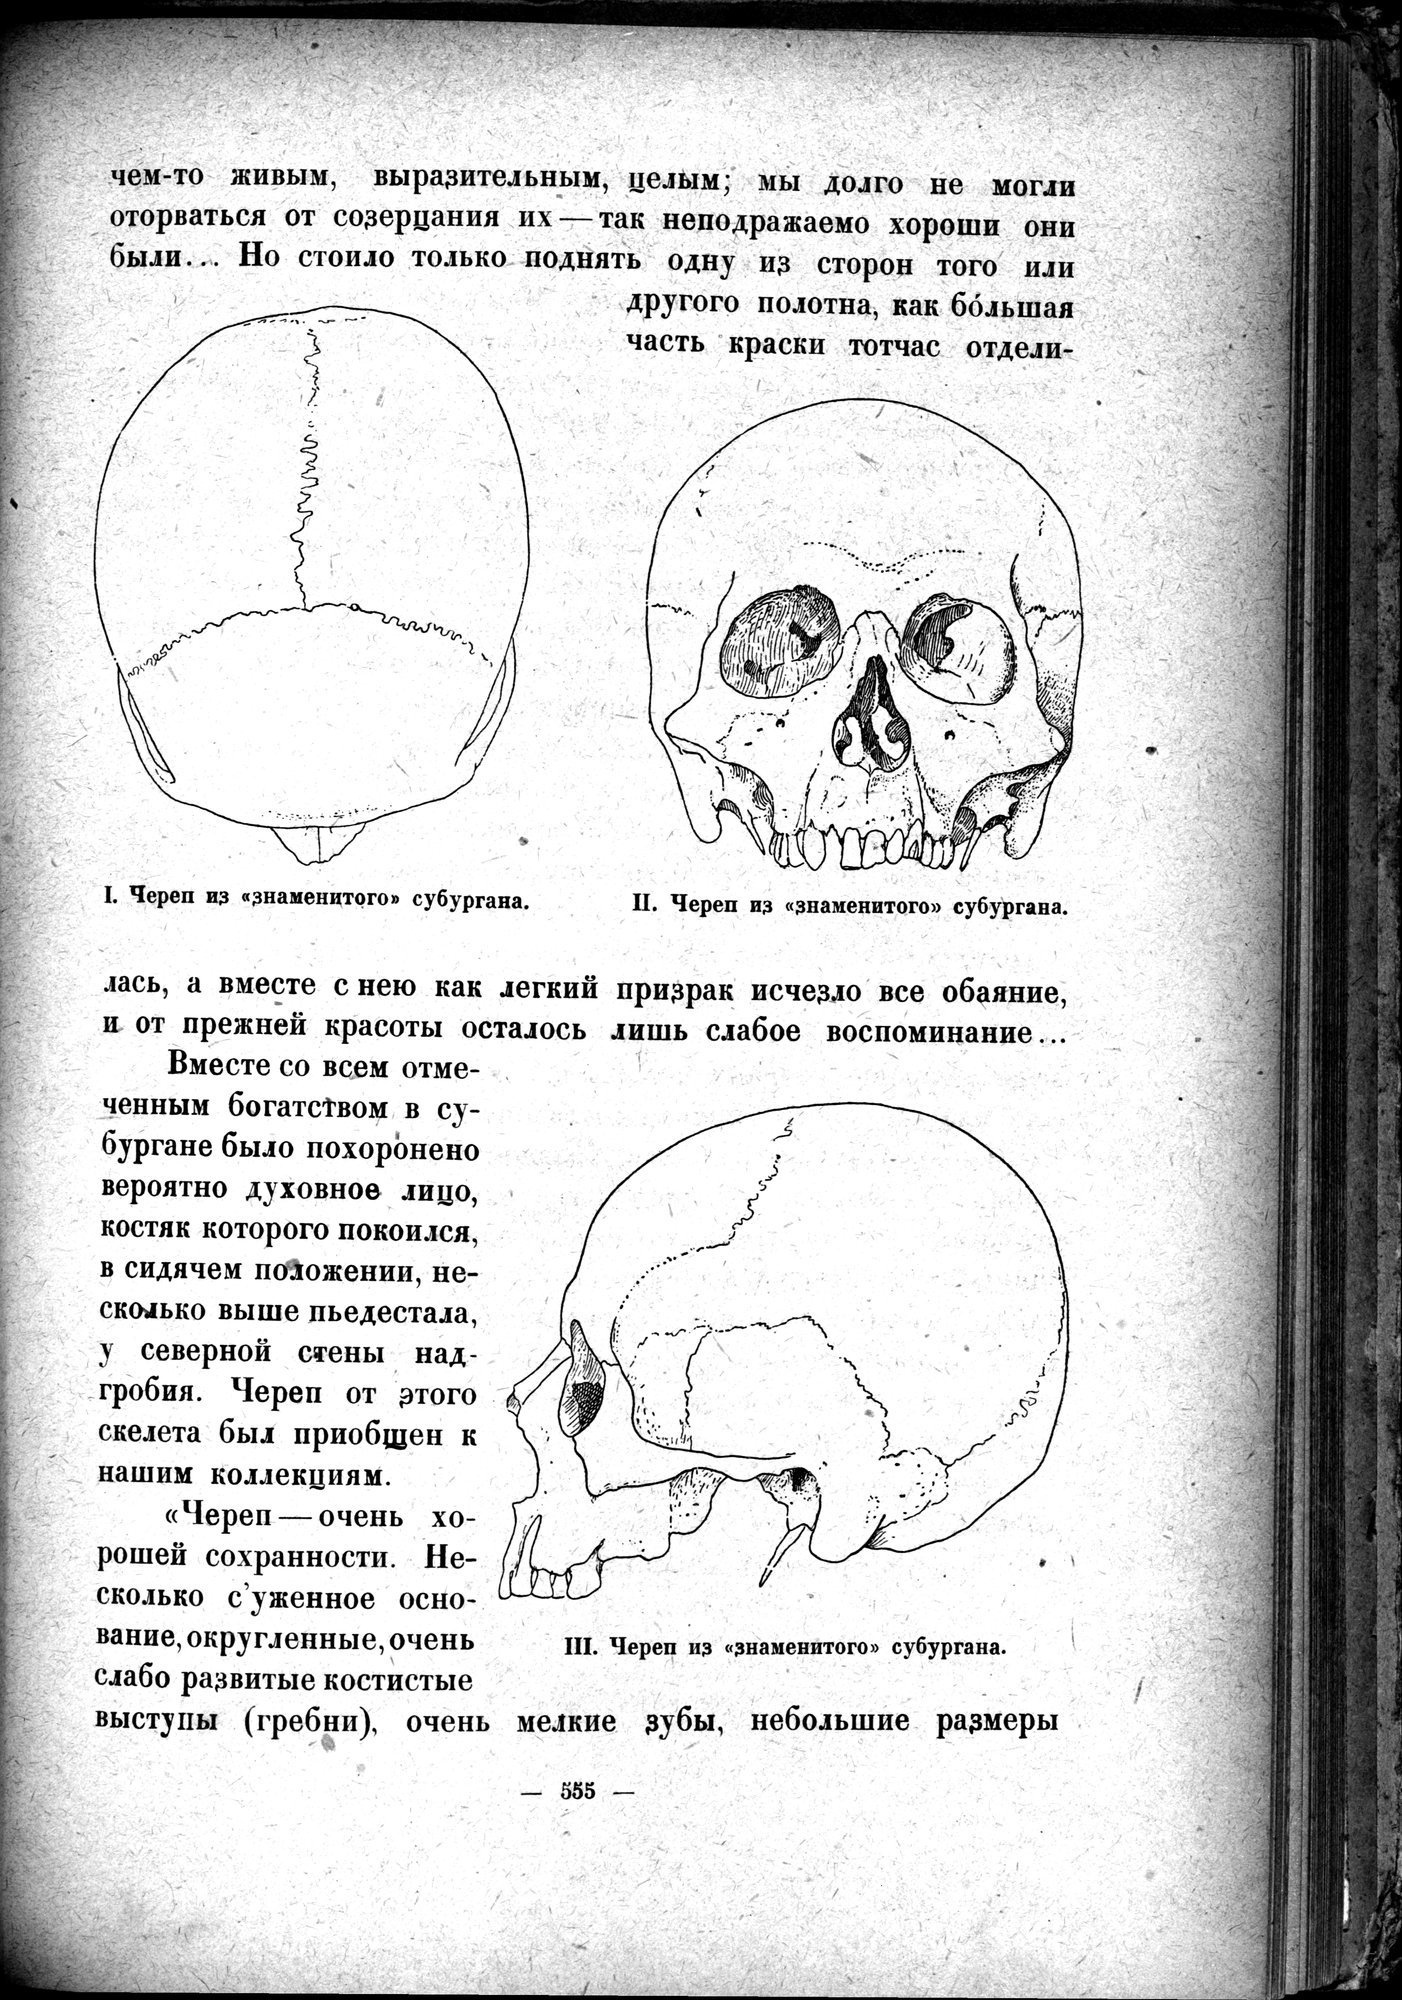 Mongoliya i Amdo i mertby gorod Khara-Khoto : vol.1 / Page 641 (Grayscale High Resolution Image)